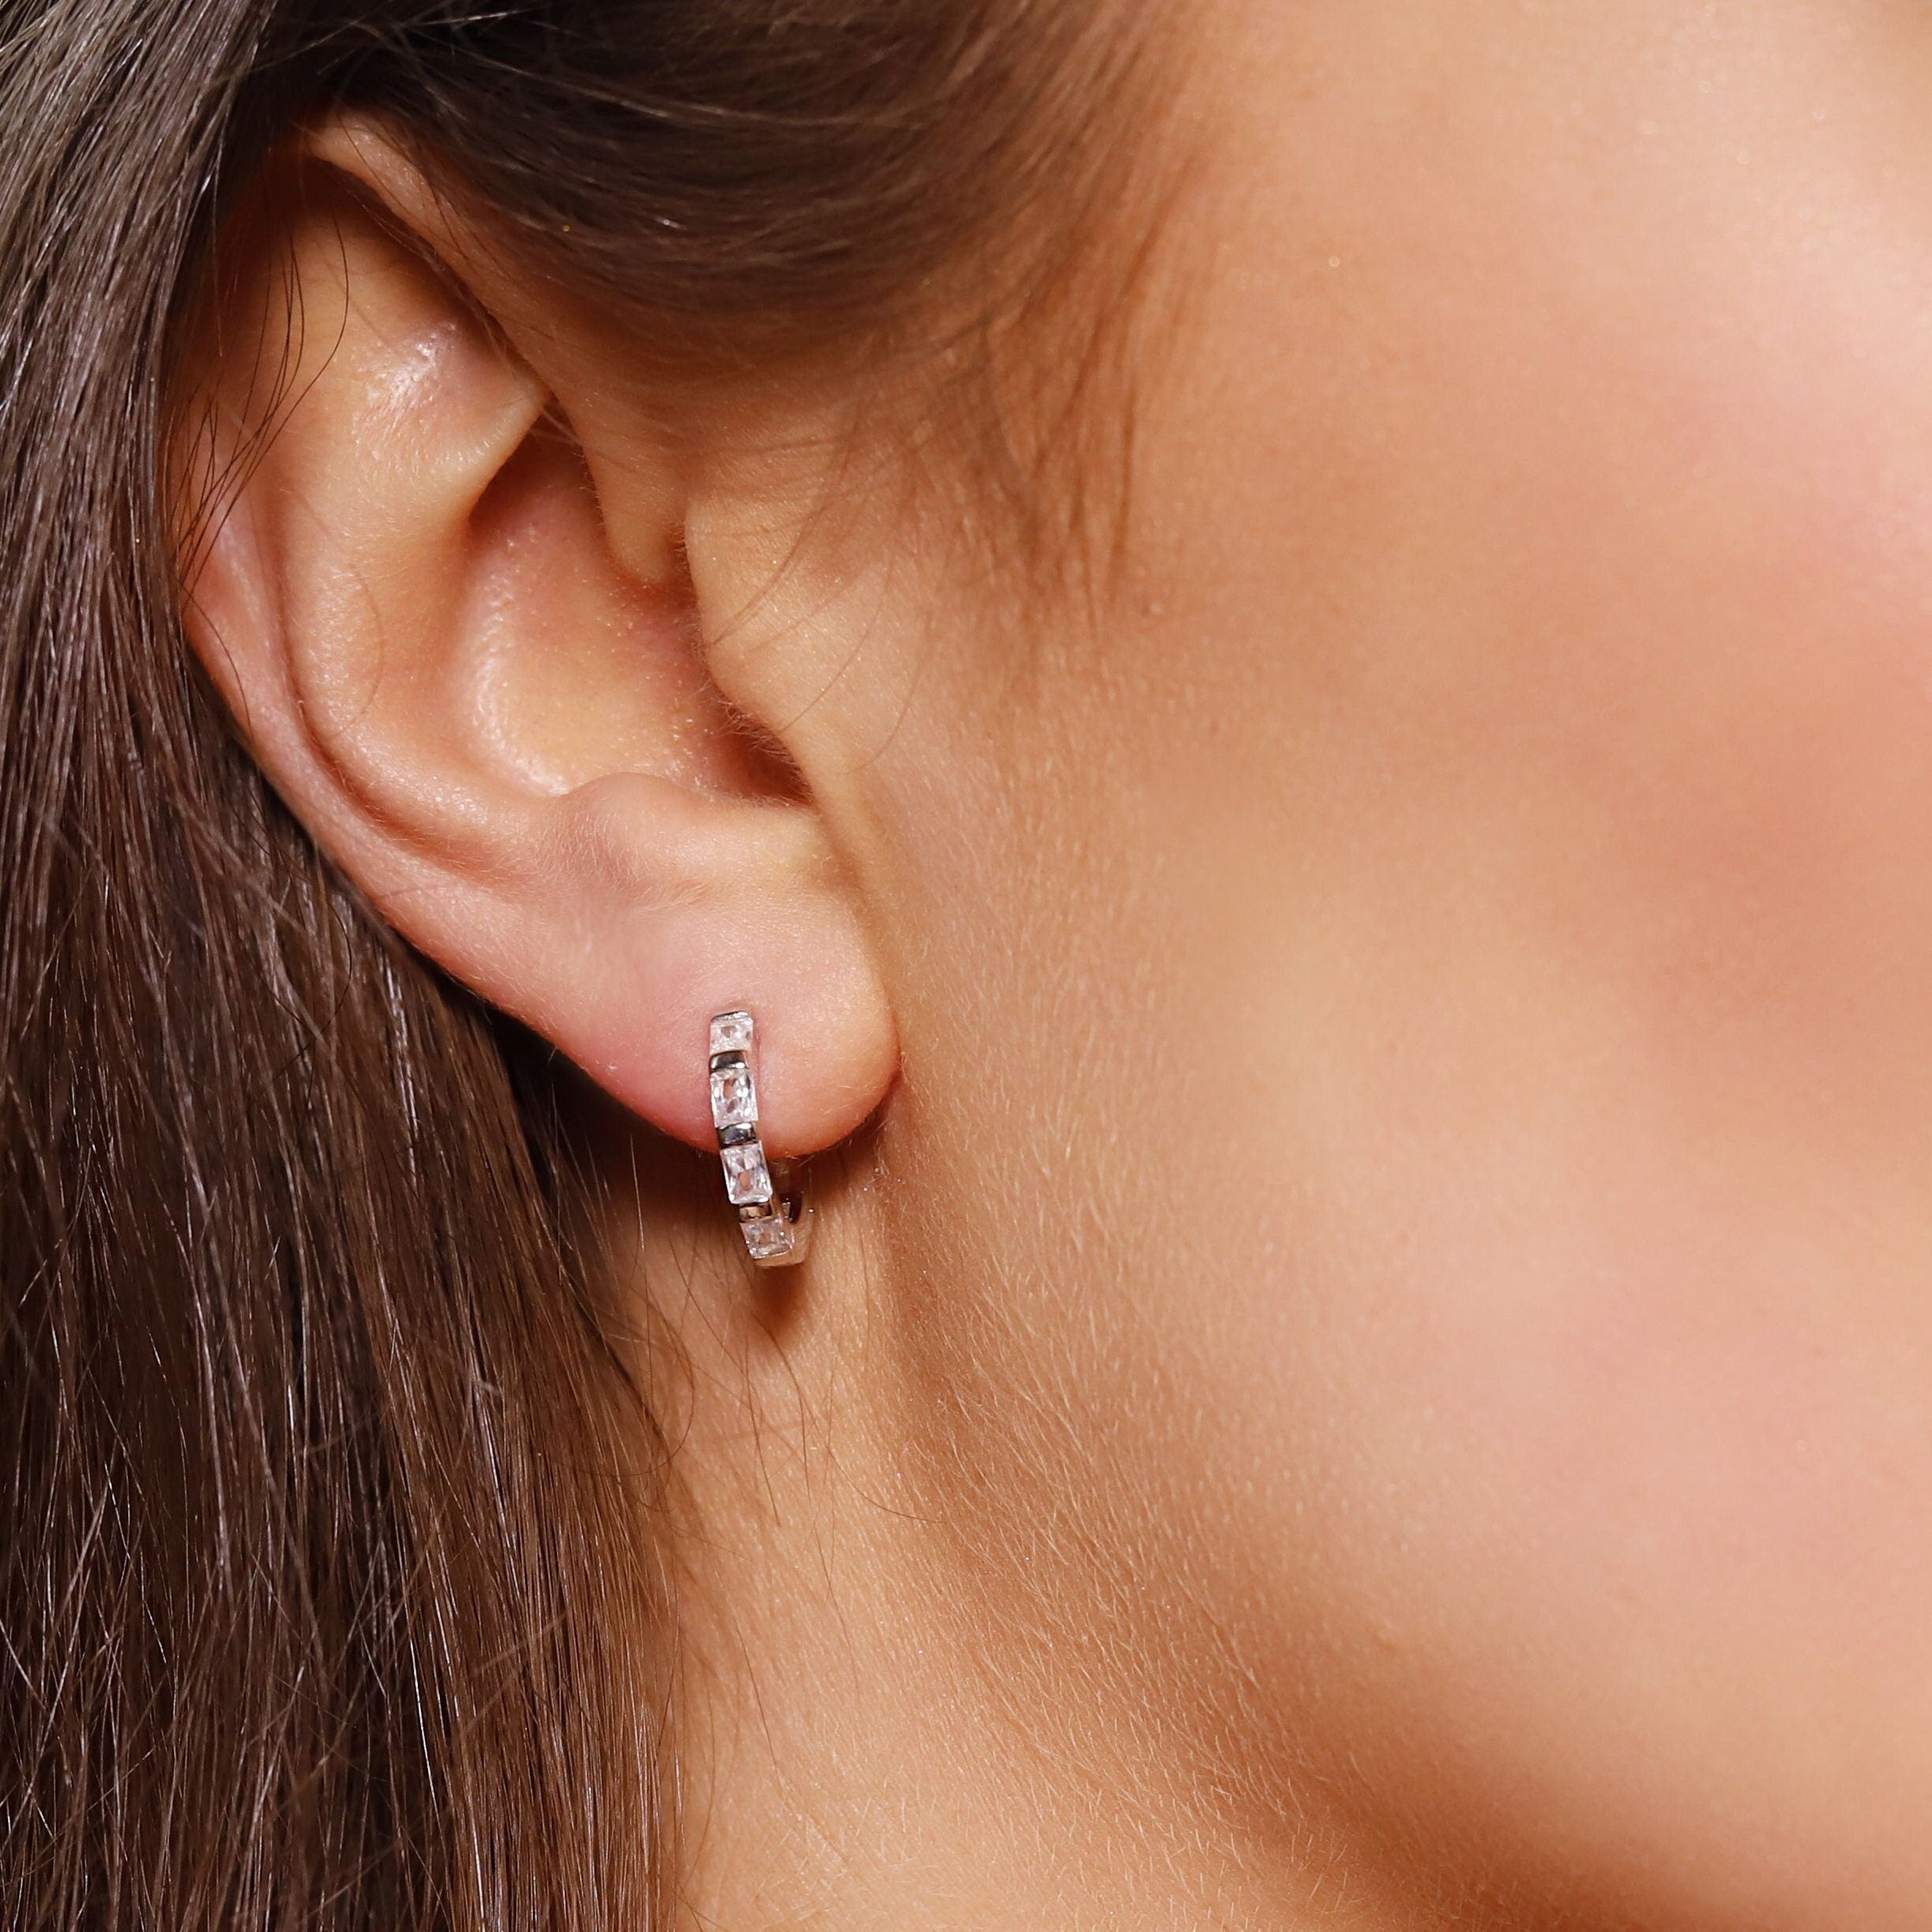 1Pc Small Hoop Earrings , Gold CZ Hoop Earrings,Huggie Hoop Earrings,Cartilage  Earrings,Minimalist Earrings